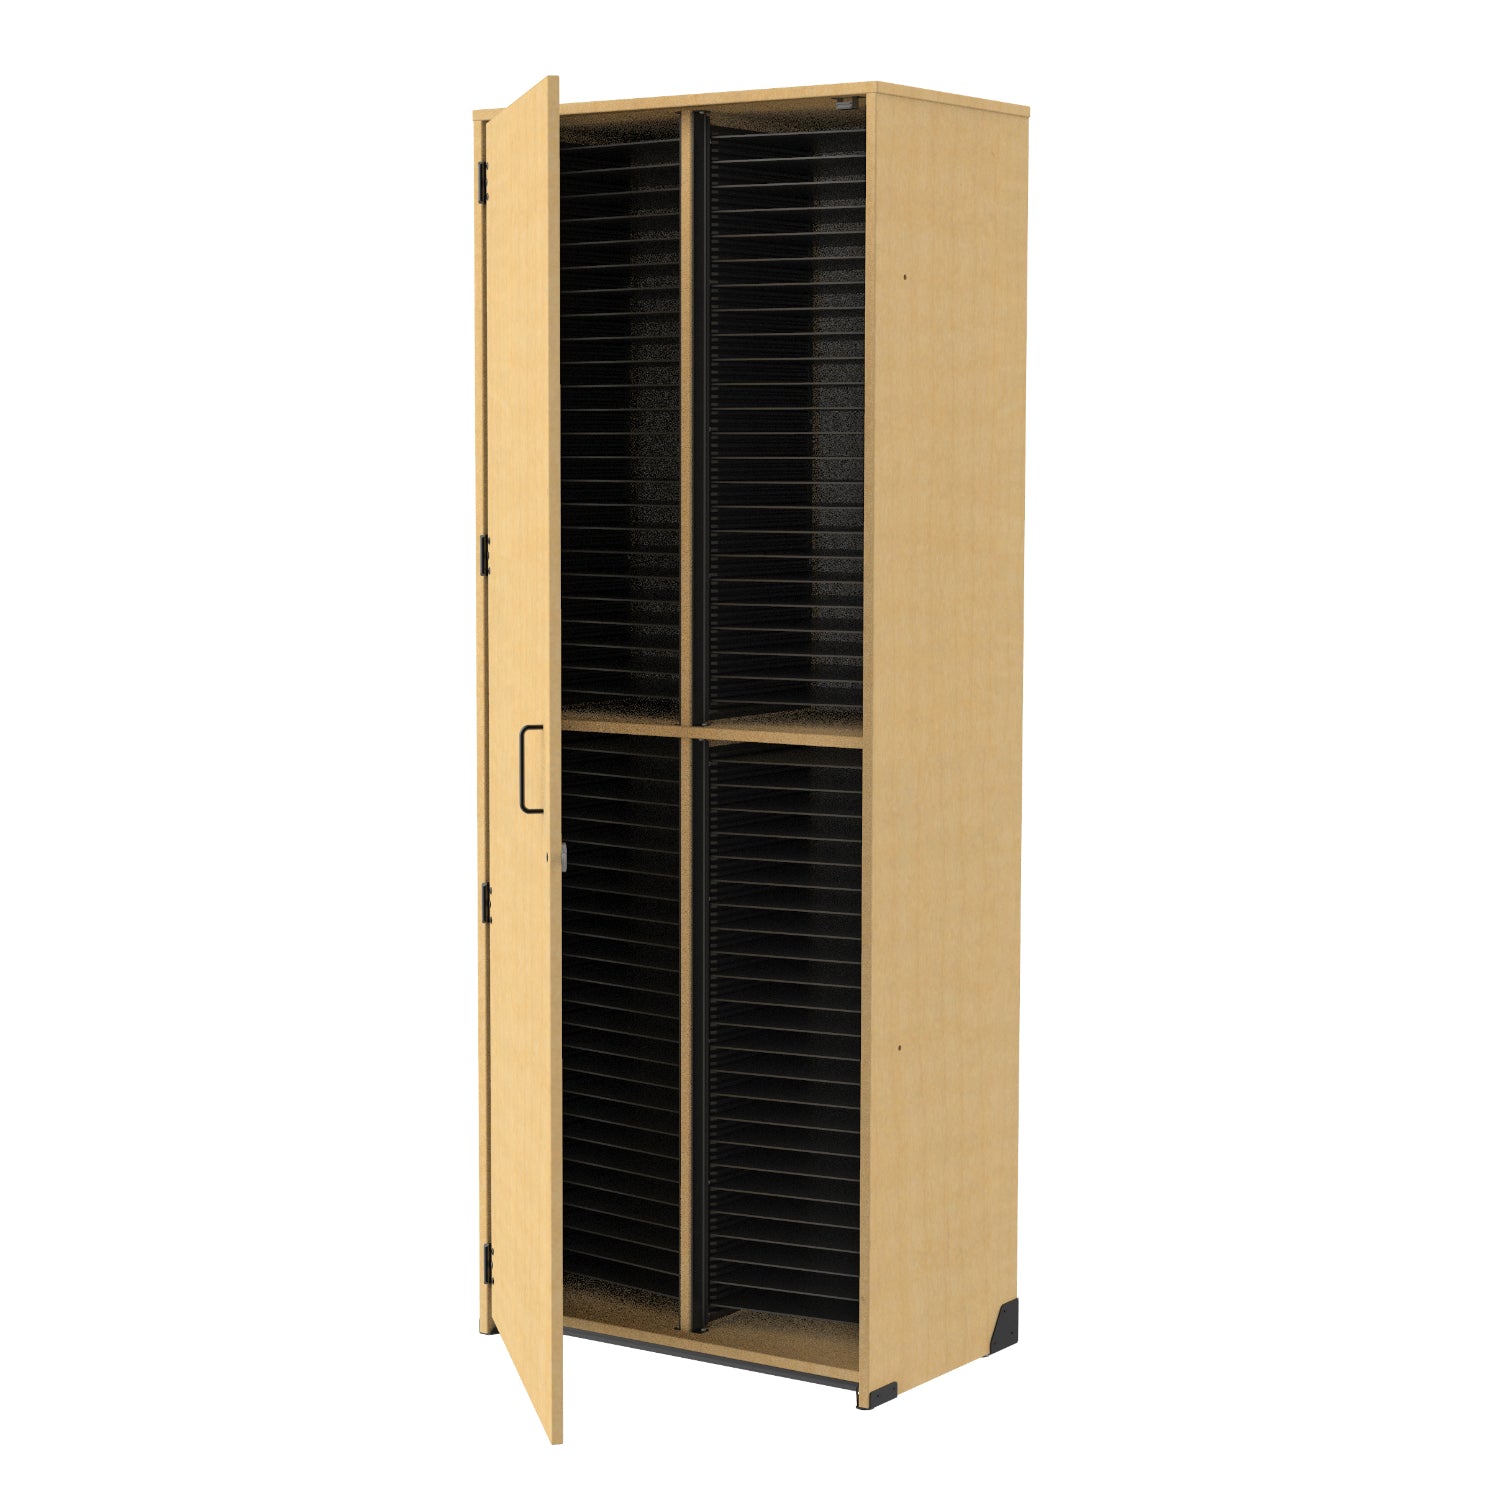 Bandstor™ Tall Band Folio Cabinet, 100 Shelves, Locking Door